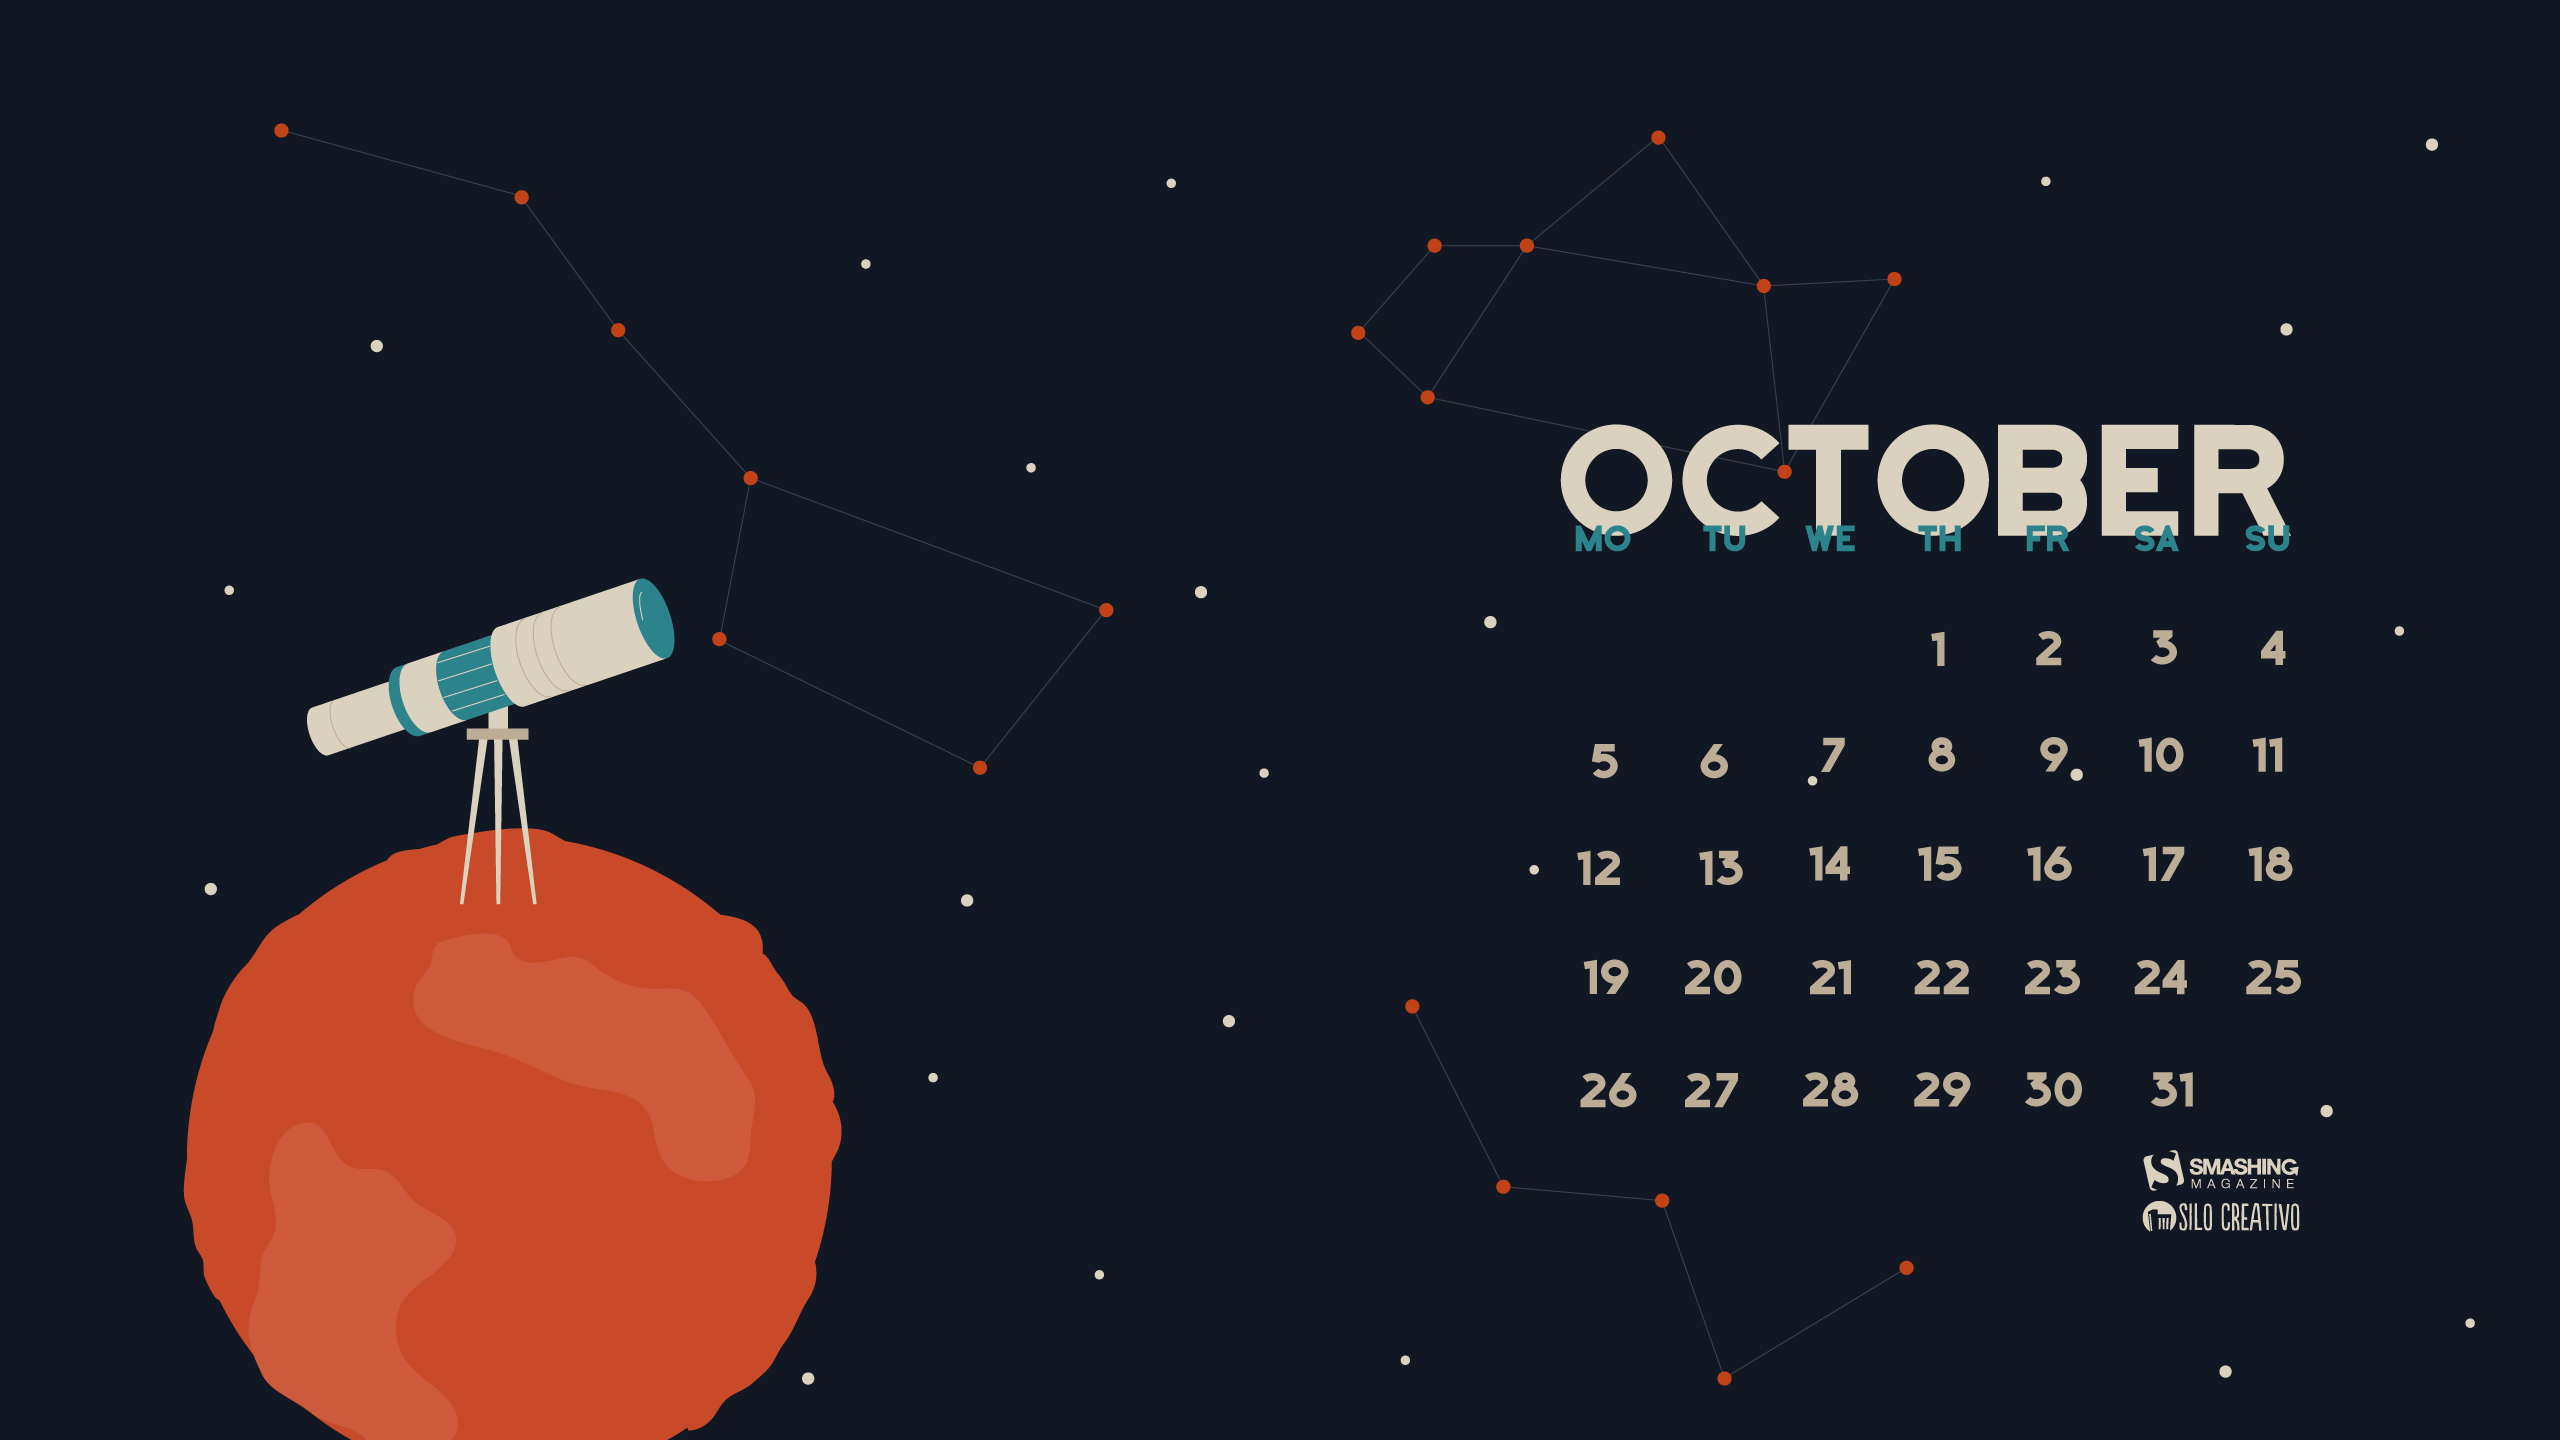 October 2022 Calendar Wallpapers  Wallpaper Cave